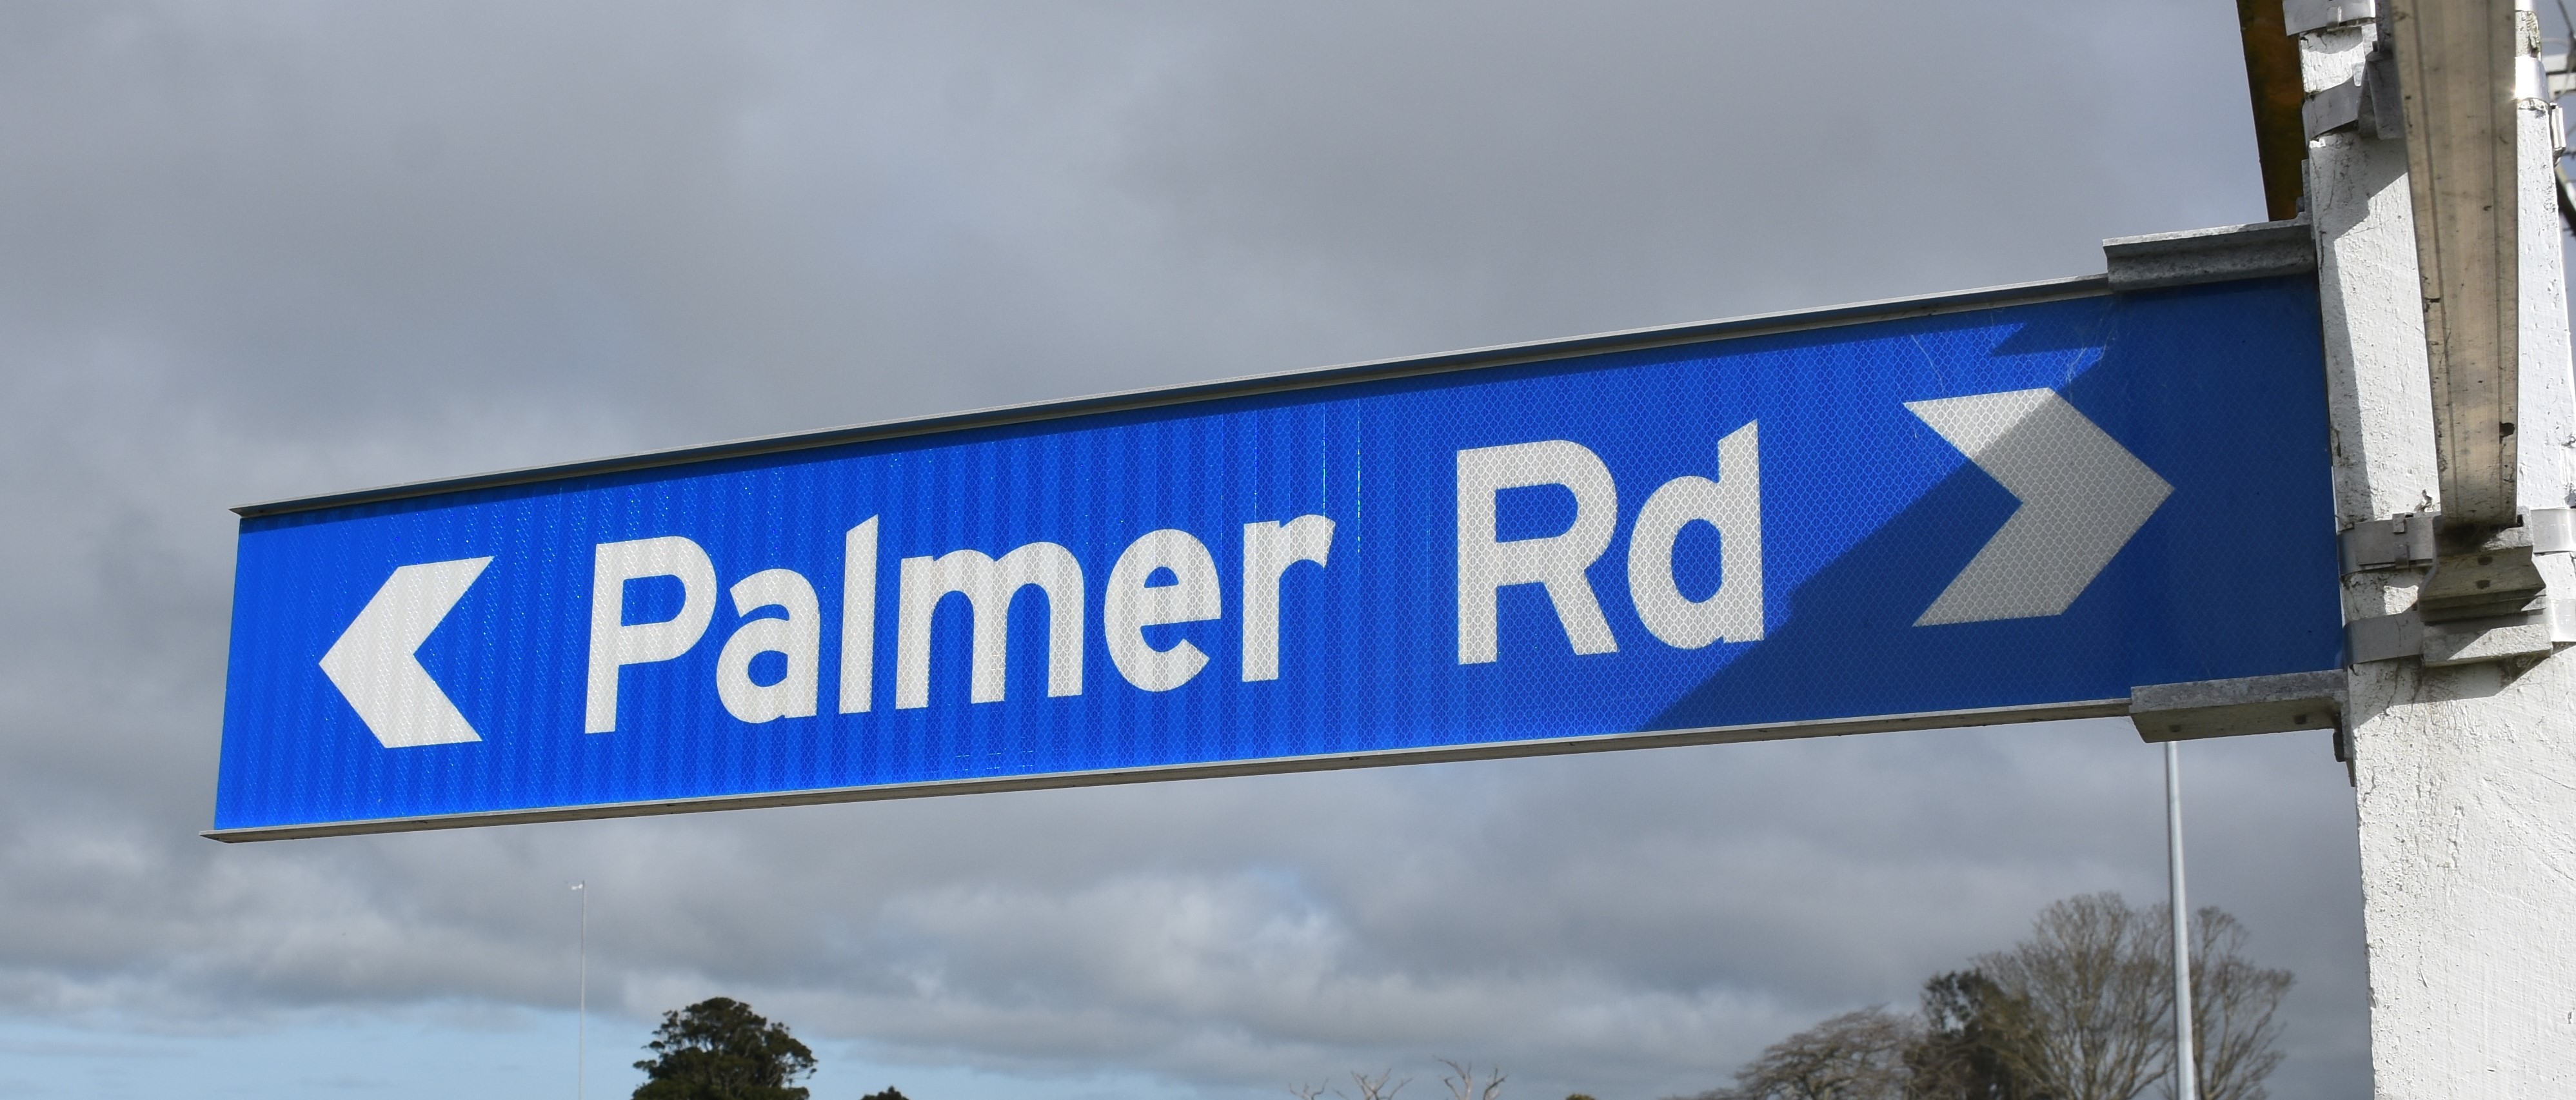 Palmer Road (2).JPG